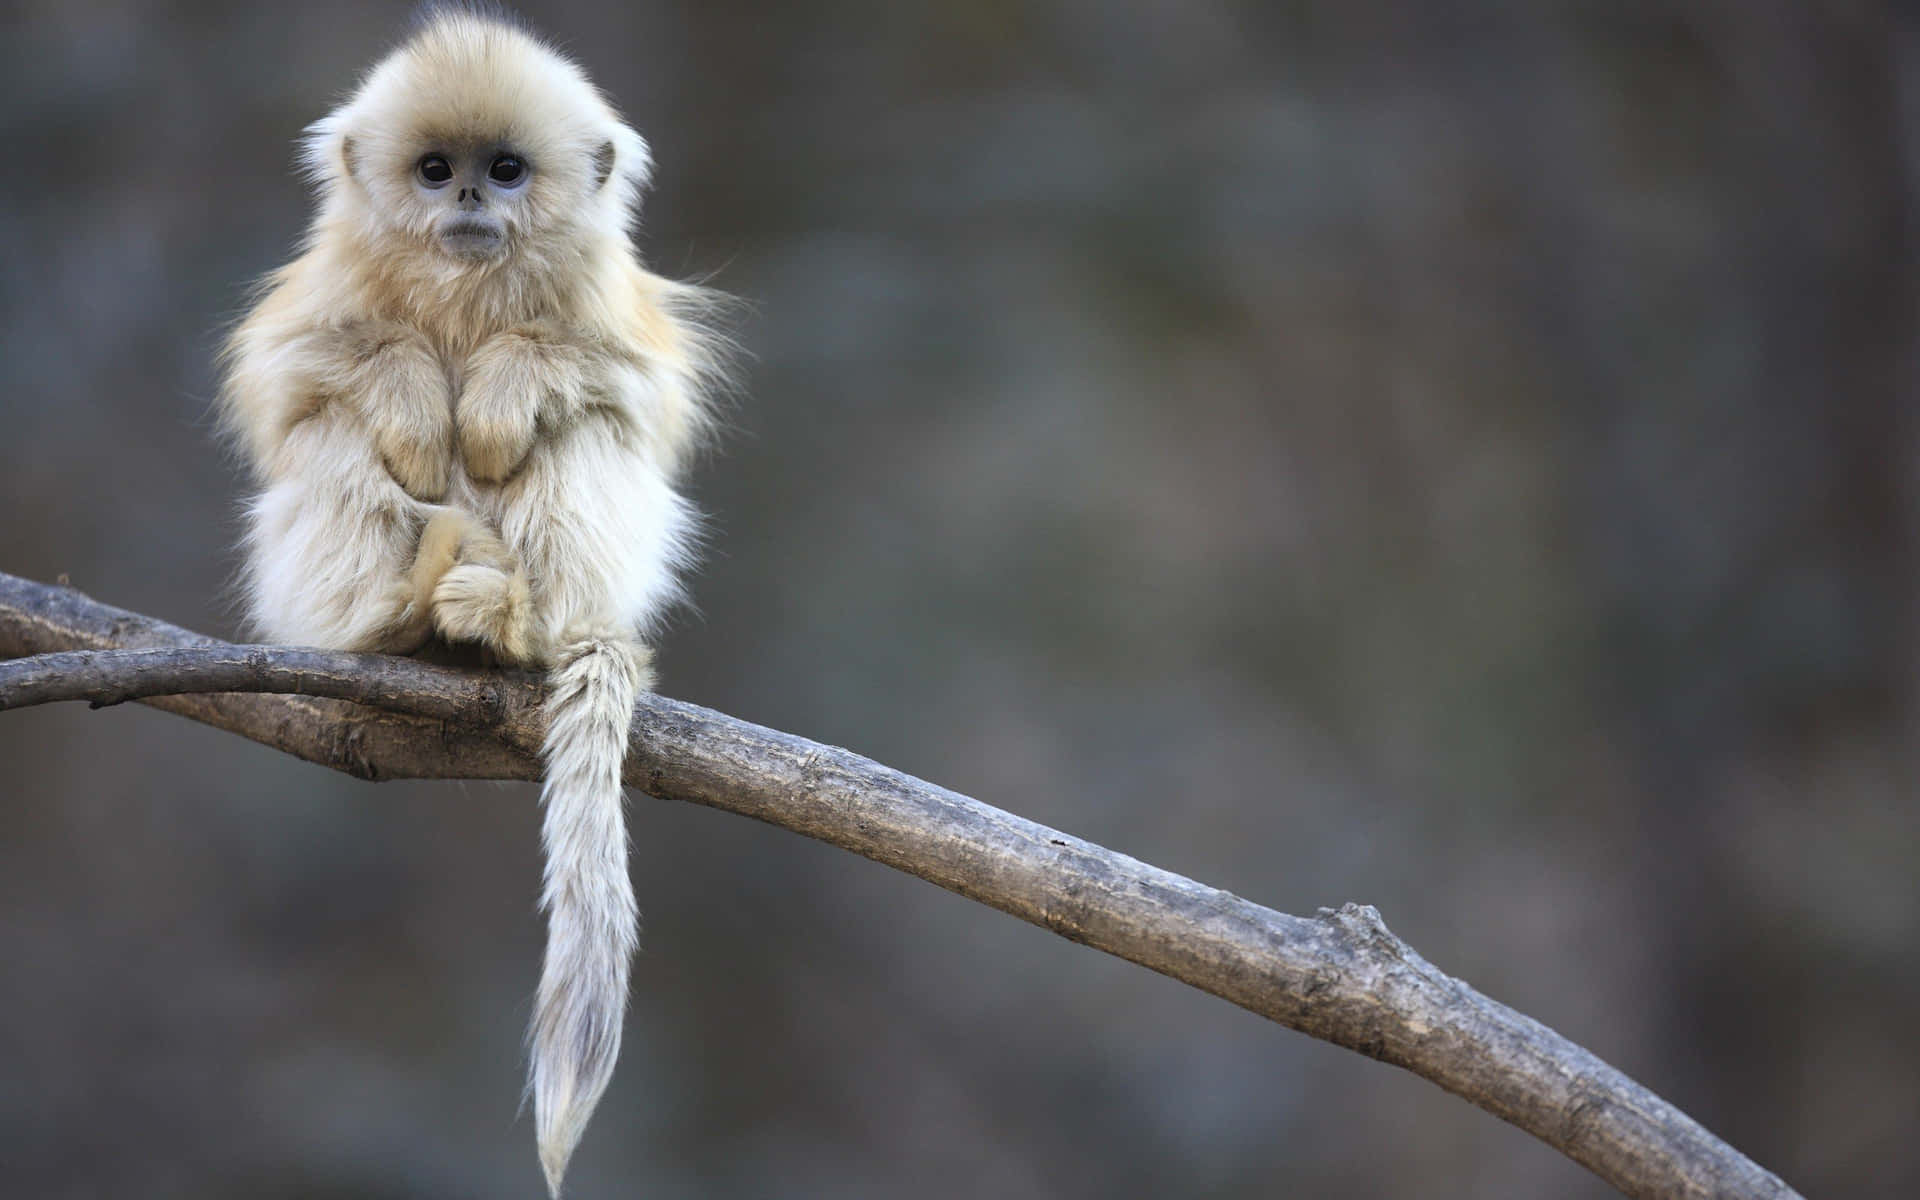 Cute Monkey Photo On A Branch Wallpaper